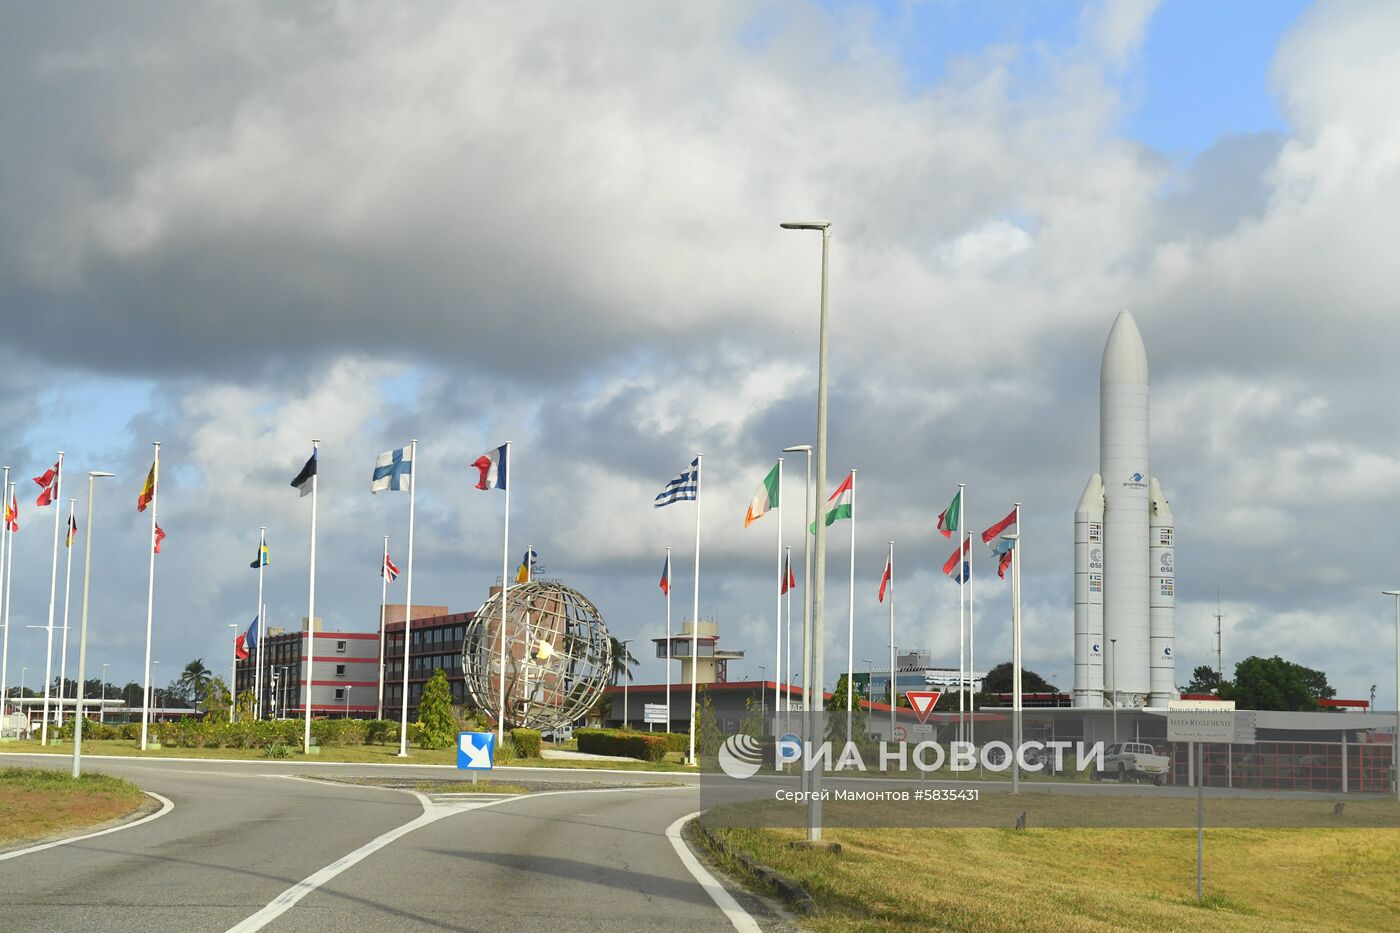 Выкатка РН "Союз-СТ" на стартовый стол на космодроме Куру